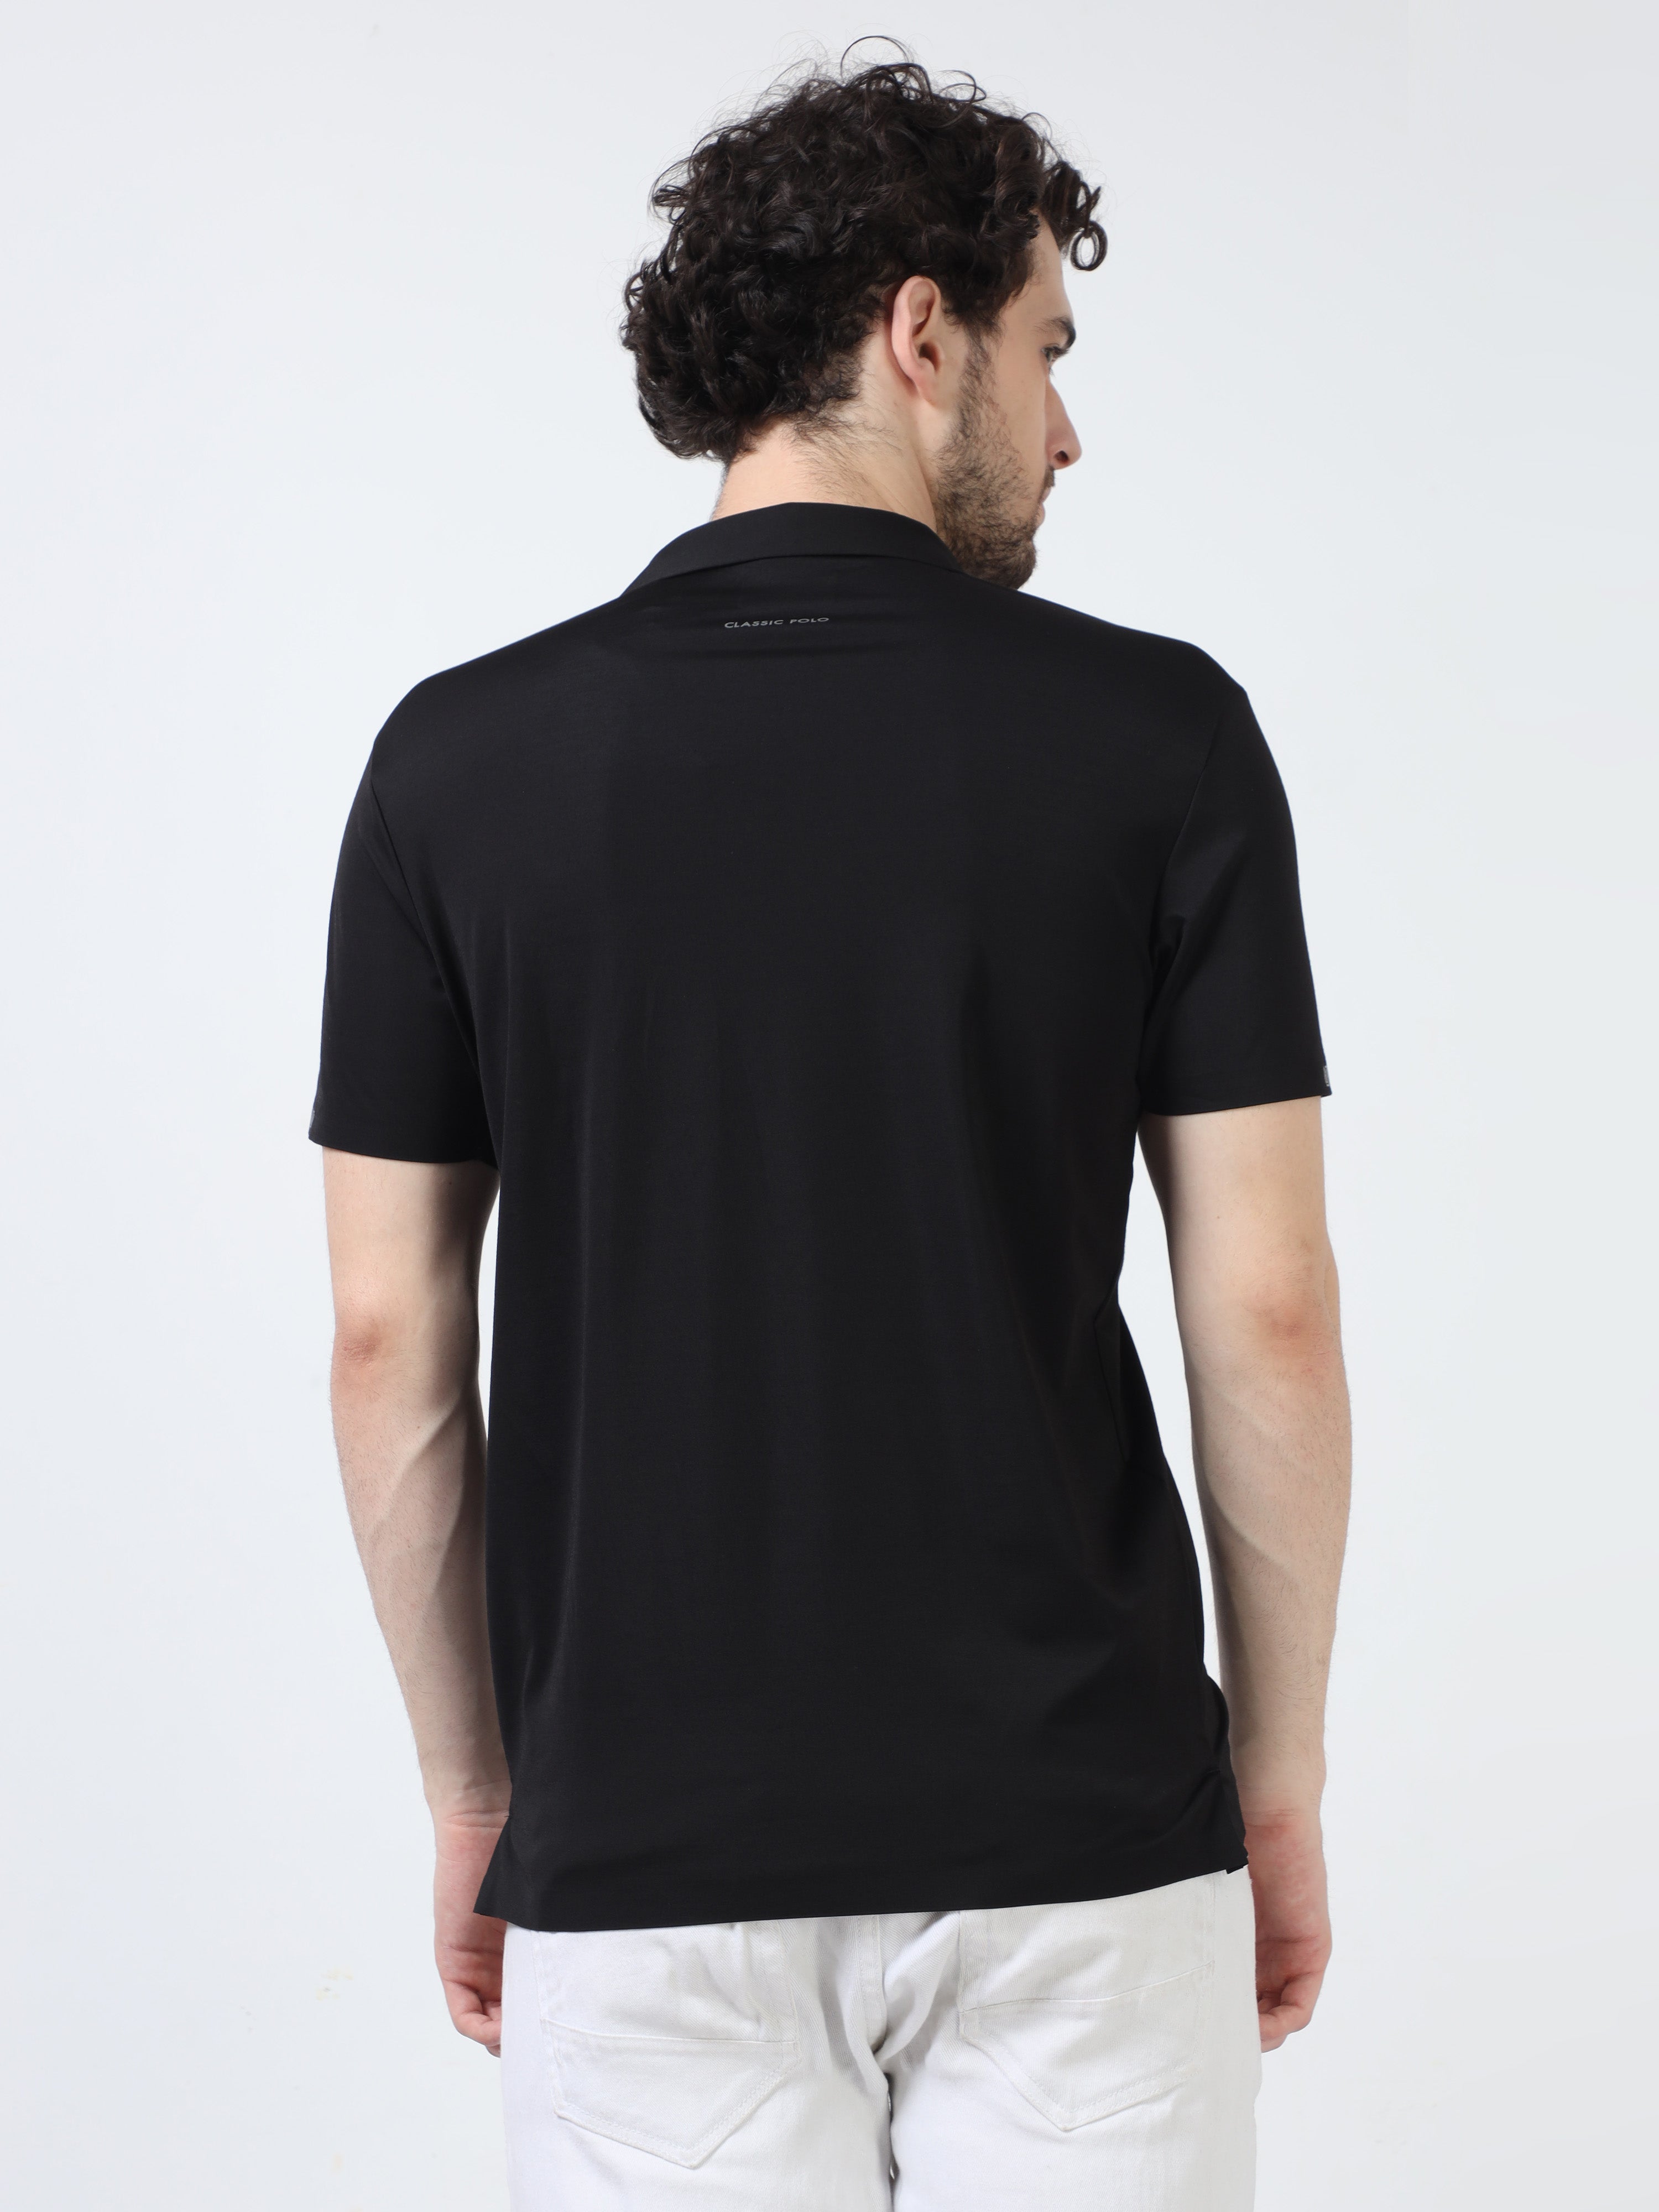 Classic Polo Men's Cotton Half Sleeve Solid Slim Fit Polo Neck Black Color T-Shirt | Unico - 90 B